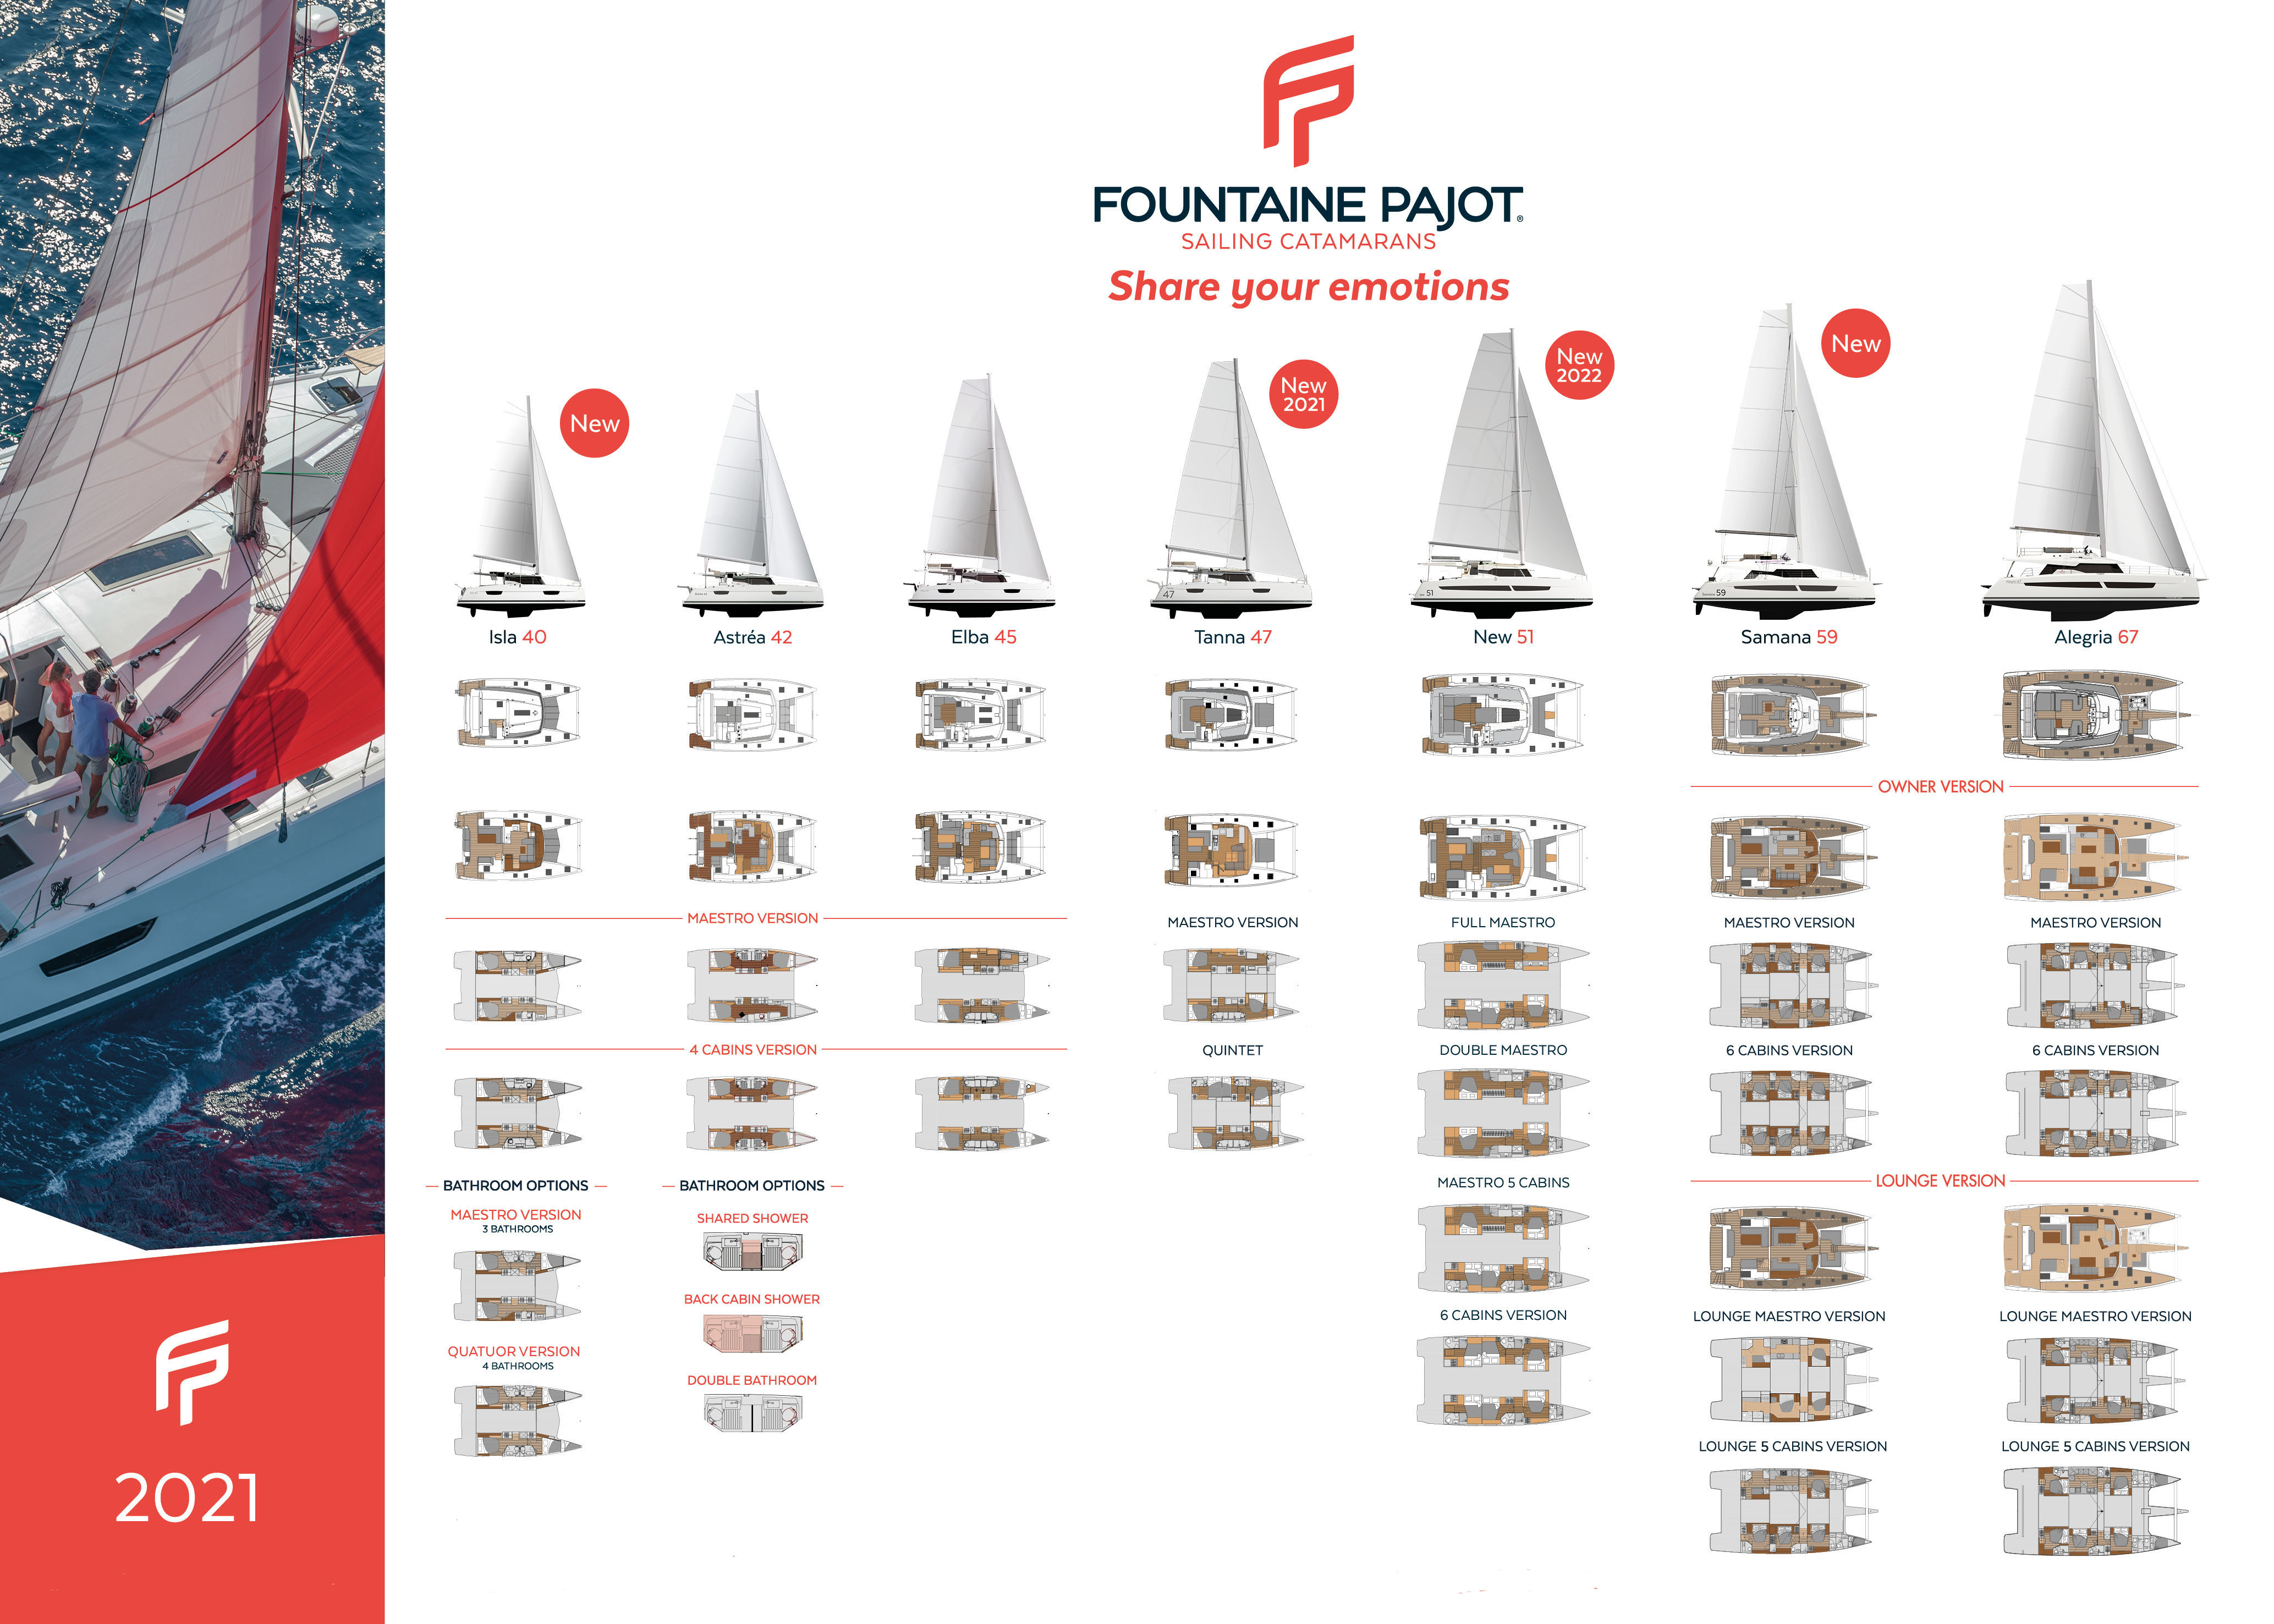 Poster Review Fountaine Pajot Sailing catamarans